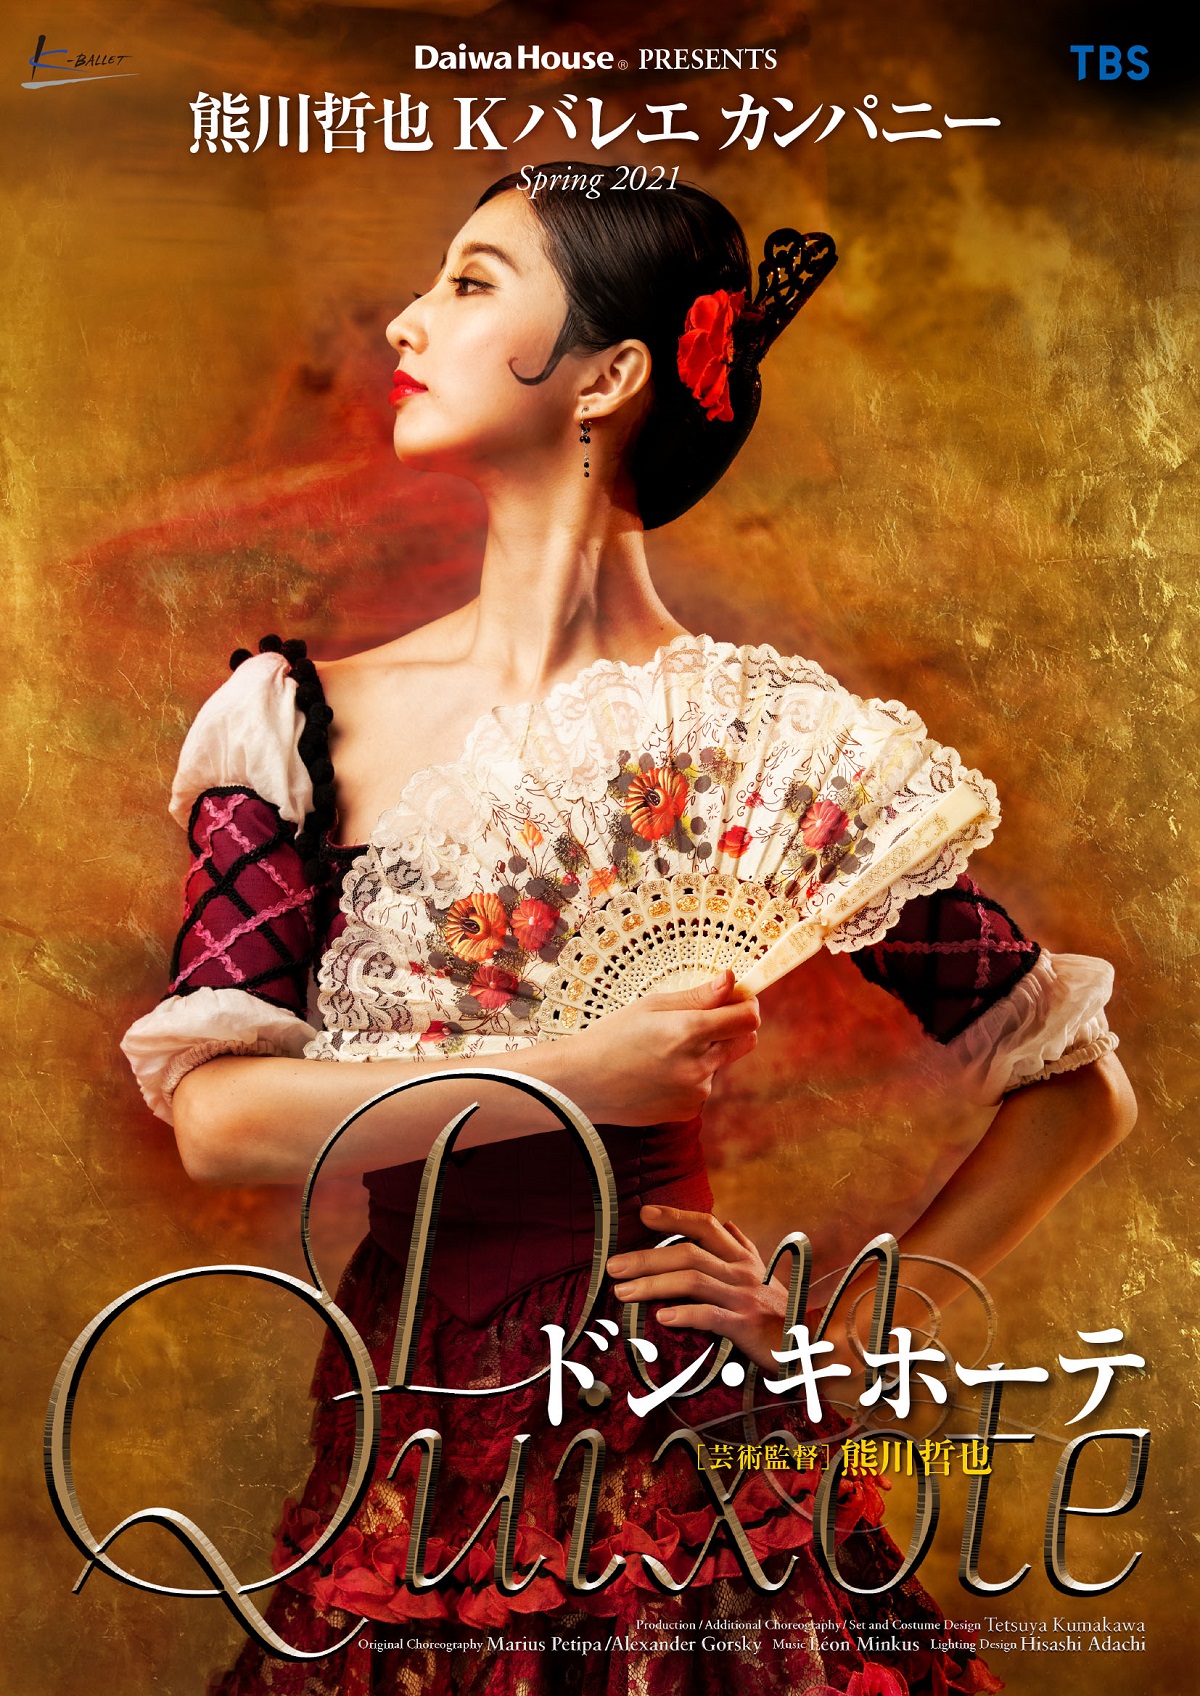 [Streaming+] Daiwa House® PRESENTS Tetsuya Kumakawa K-BALLET COMPANY Spring 2021 「Don Quixote」